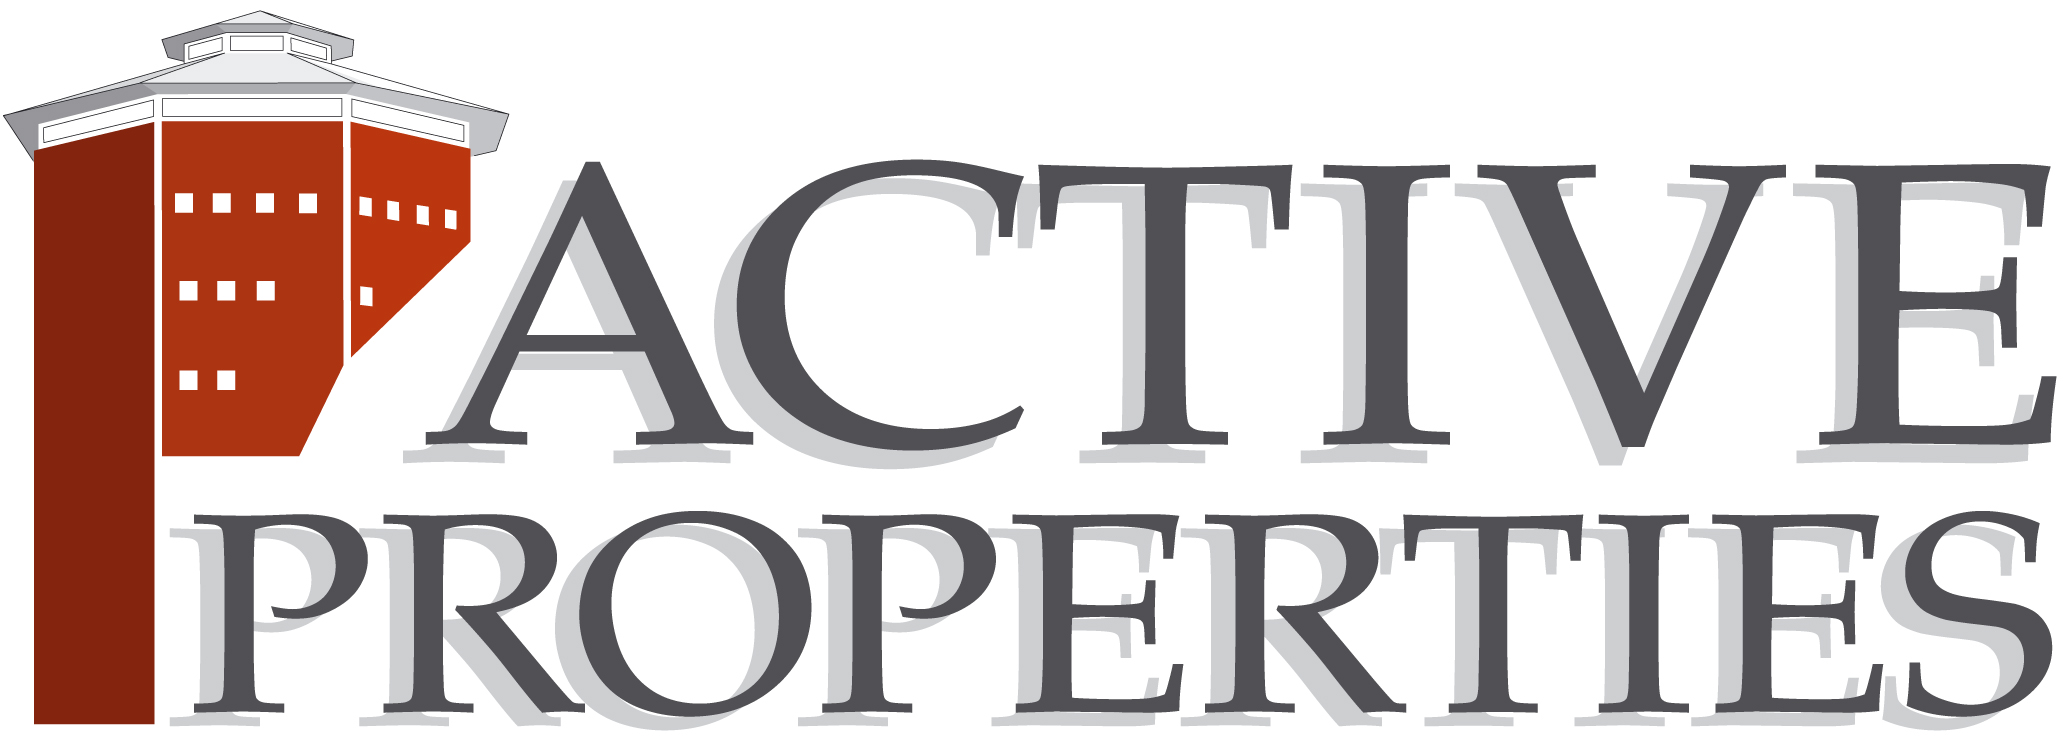 Active Properties A logo bild